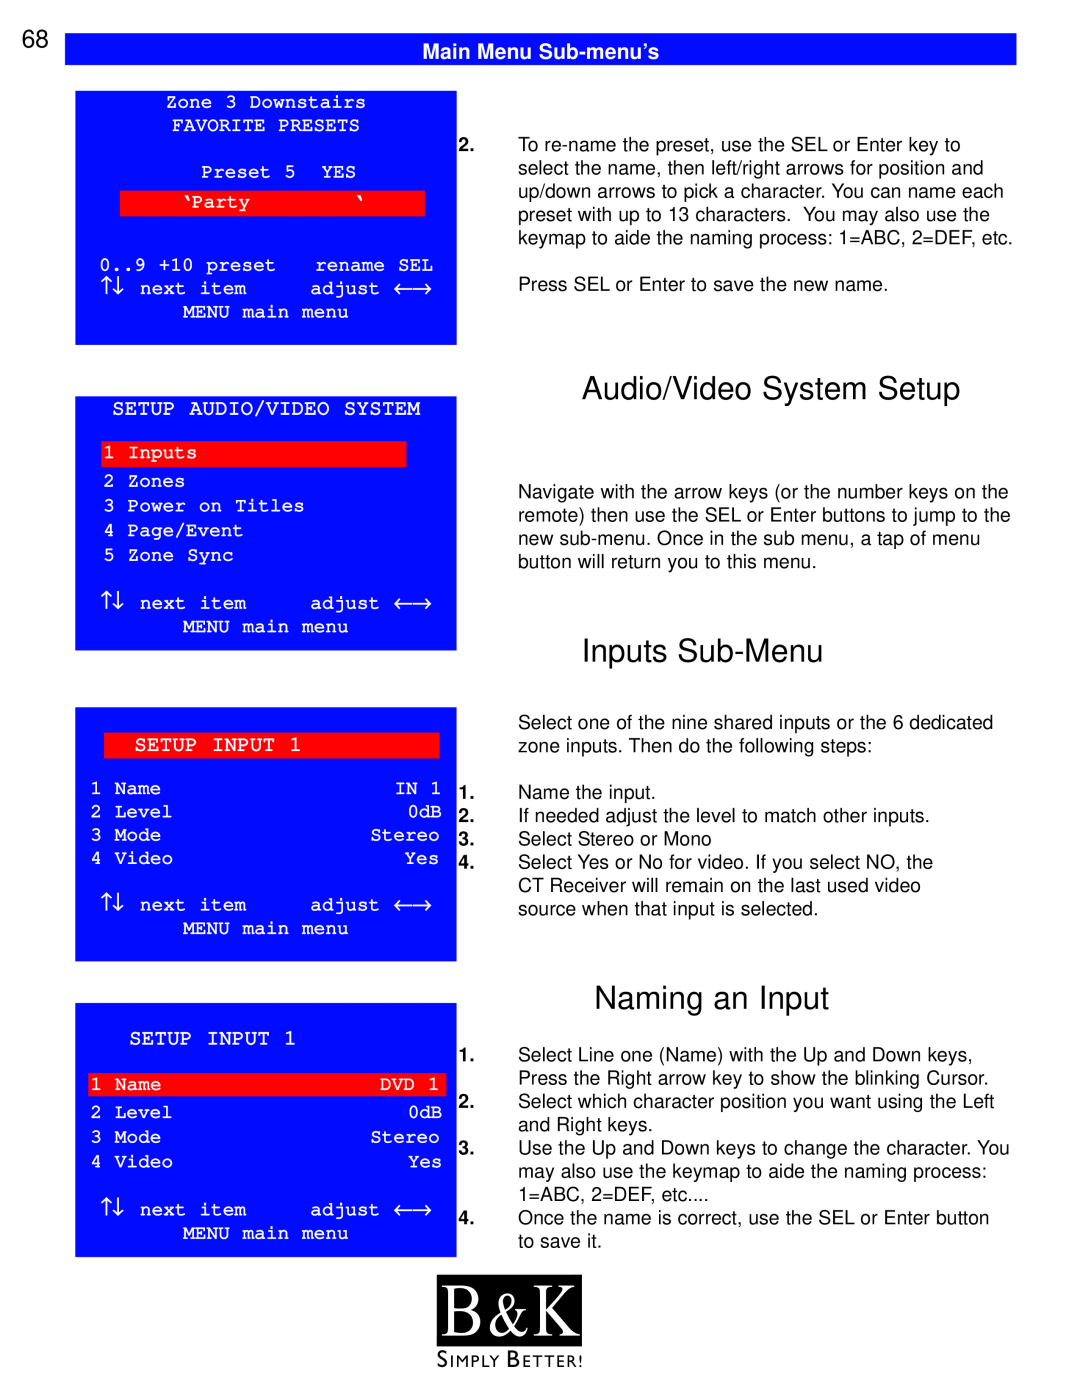 B&K CT310, CT600, CT602, CT610, CT300 Audio/Video System Setup, Inputs Sub-Menu, Naming an Input, B & K, Main Menu Sub-menu’s 